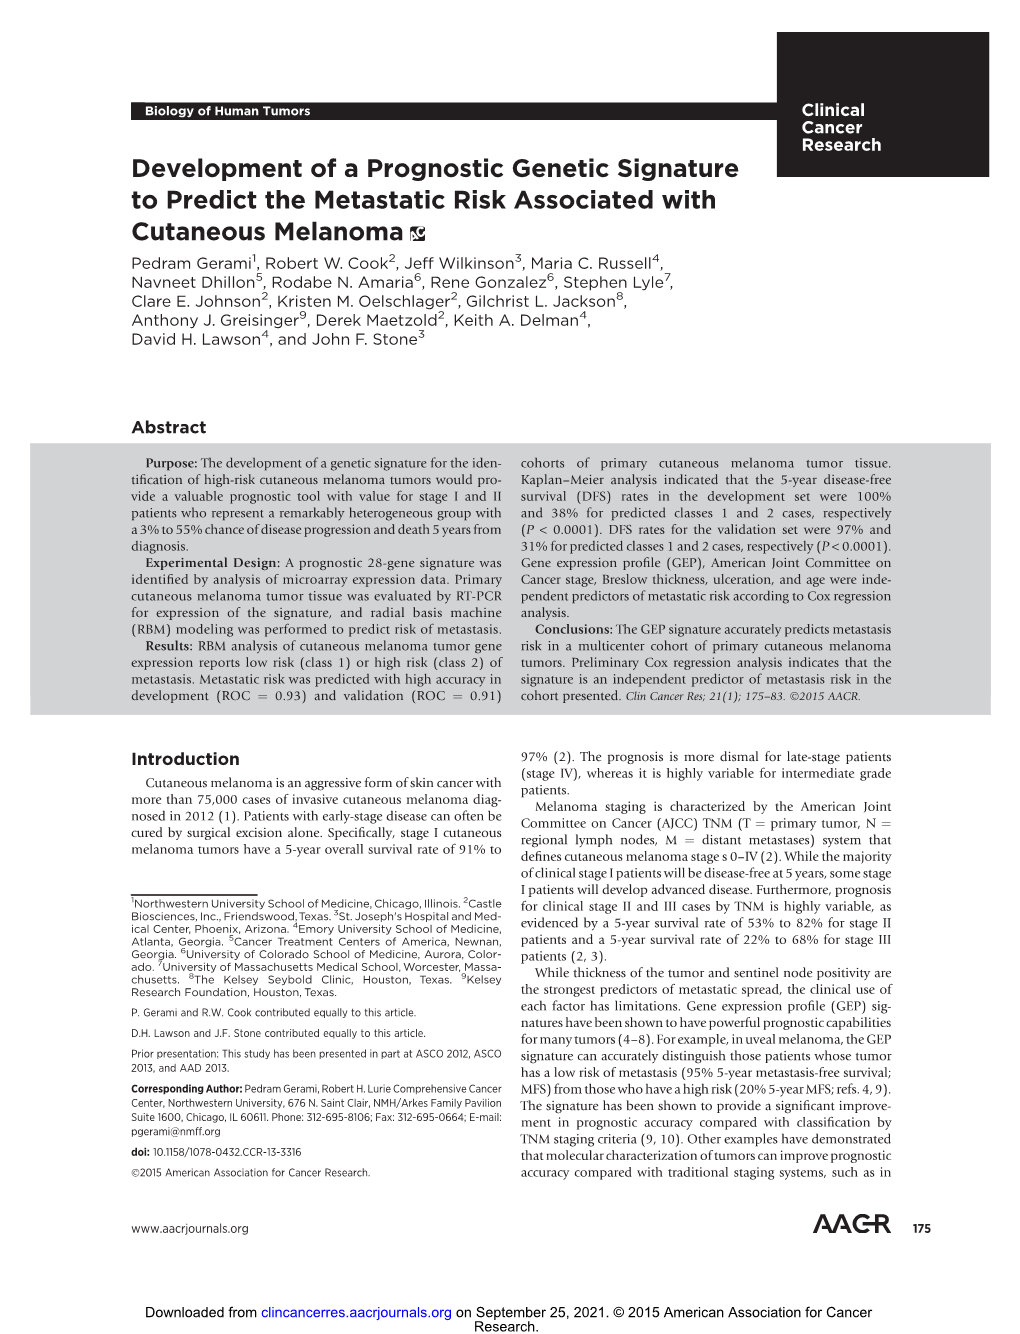 Development of a Prognostic Genetic Signature to Predict the Metastatic Risk Associated with Cutaneous Melanoma Pedram Gerami1, Robert W